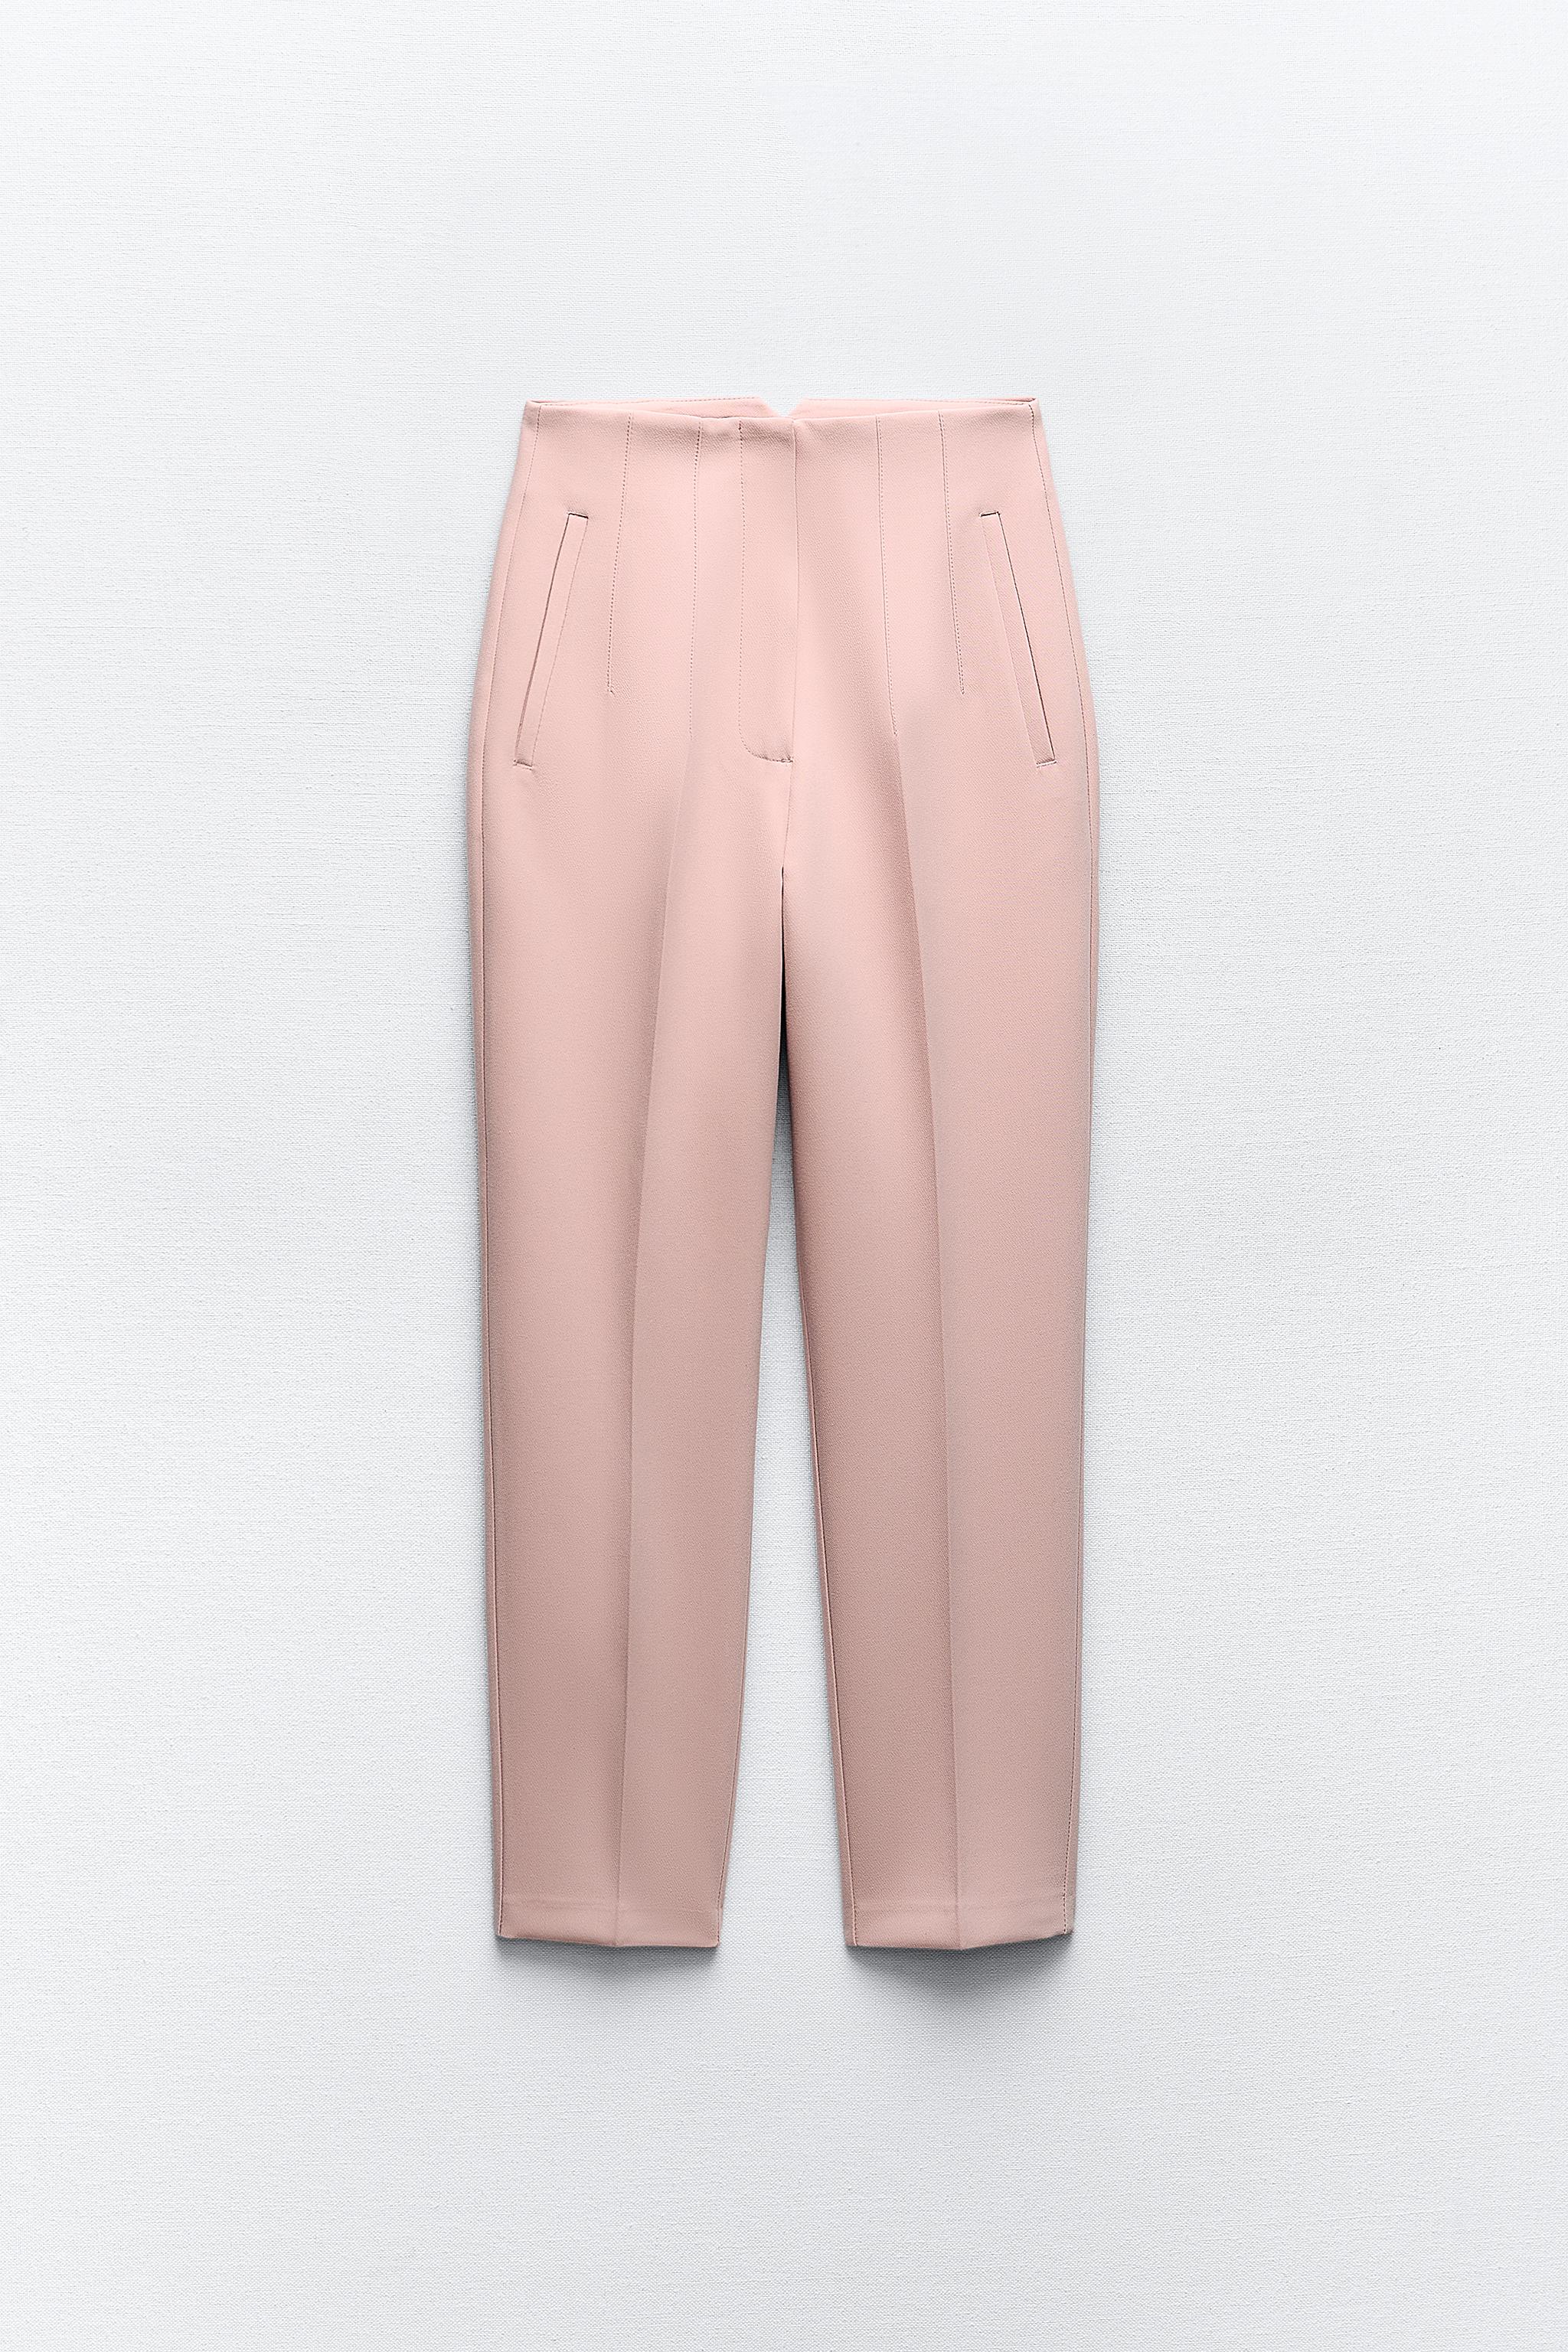 Zara Highwaist Trousers